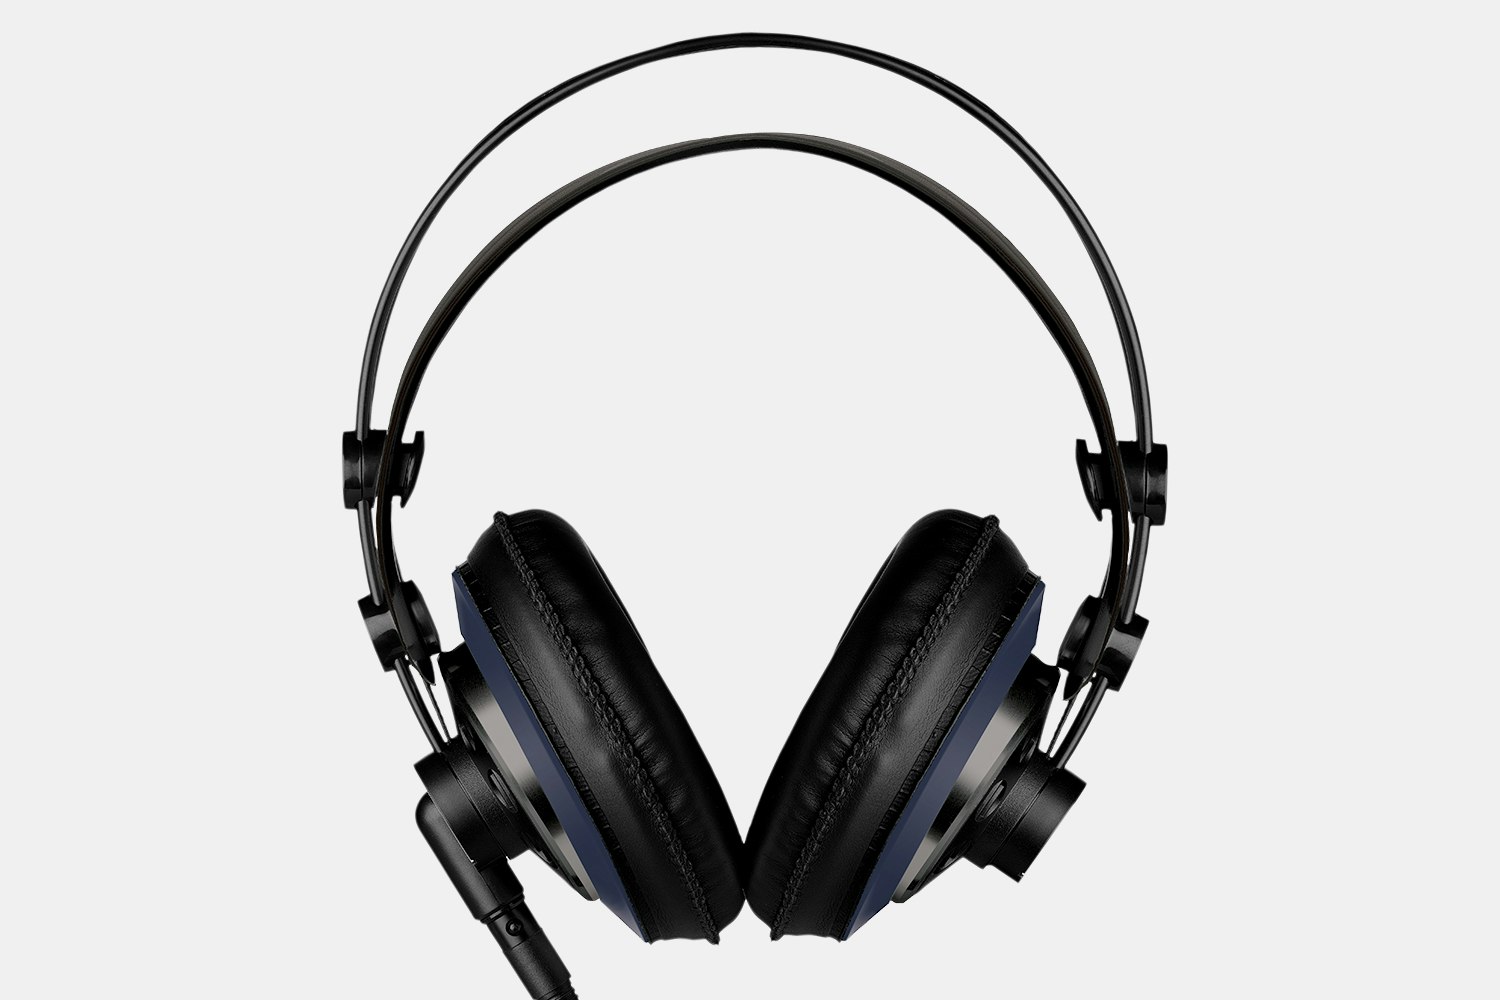 Massdrop x AKG M220 Pro Headphones